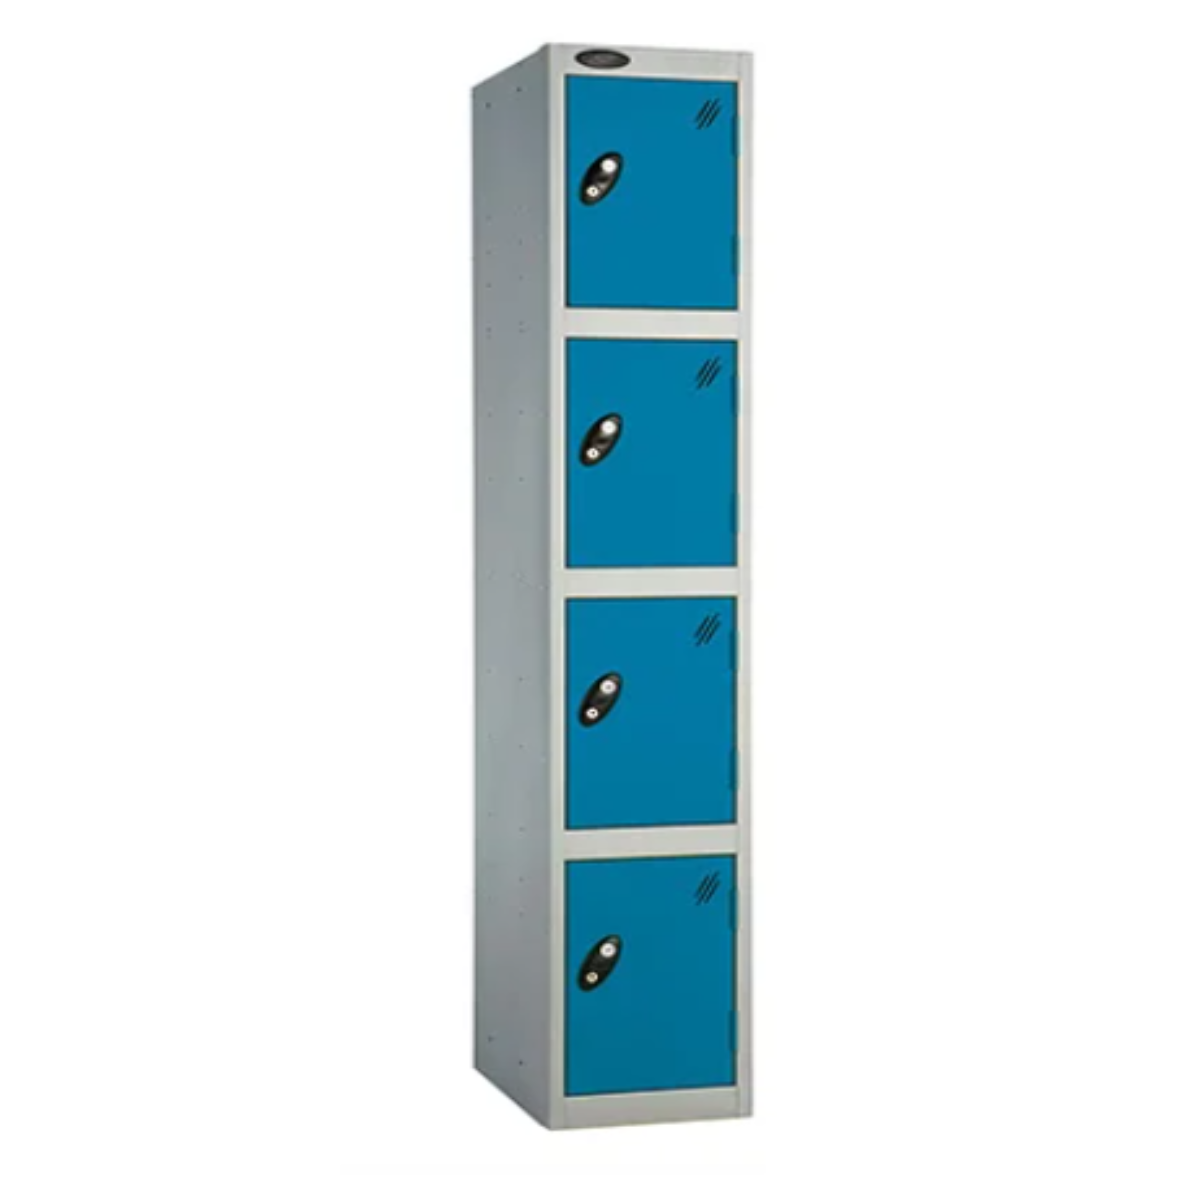 NEW Probe 4 door personal lockers cw keys 1780Hx305Wx460D BLUE and GREY